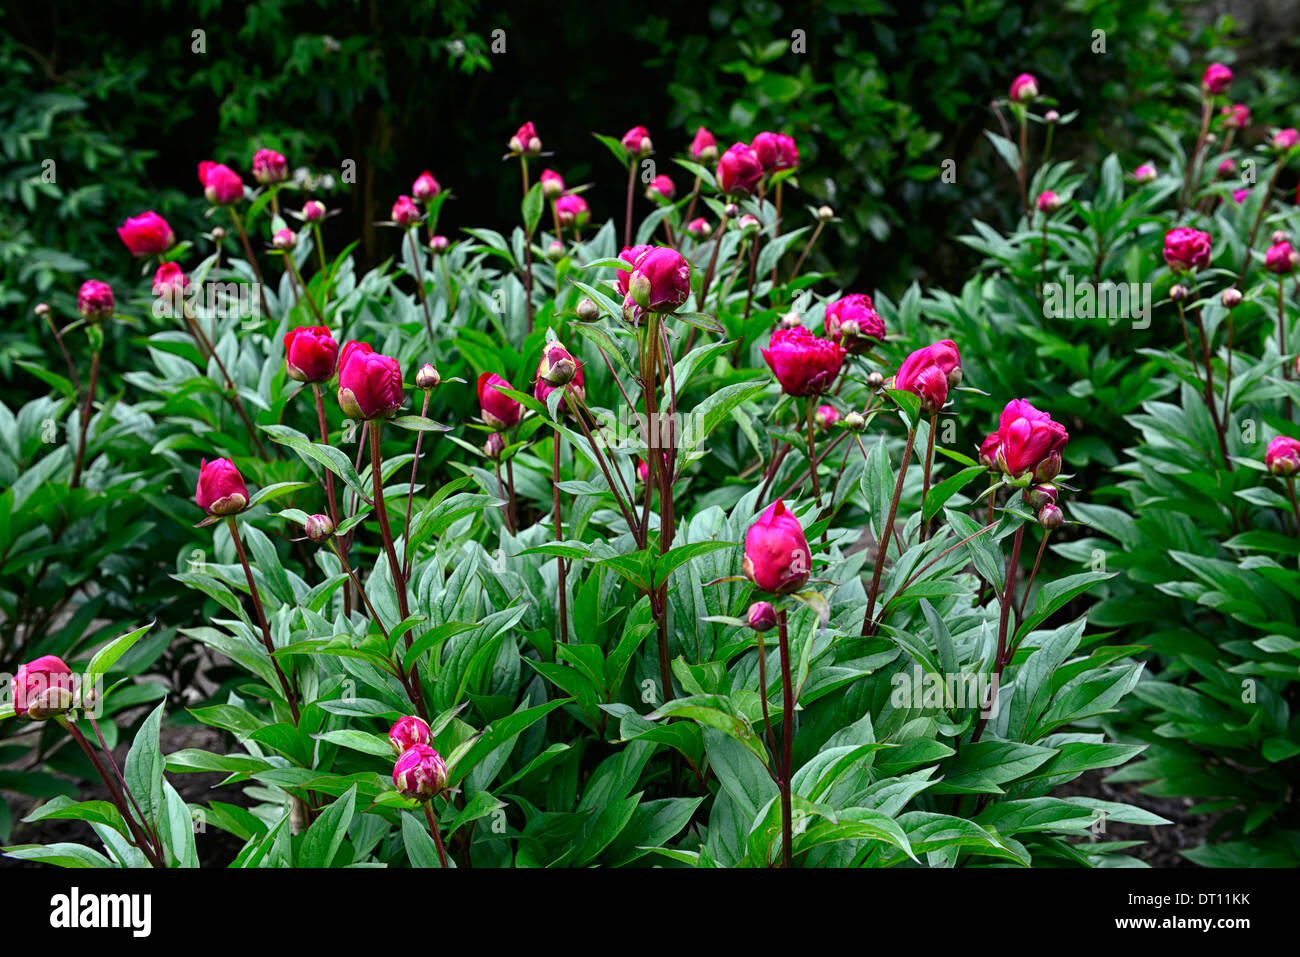 paeonia officinalis rubra plena peony peonies pink red flower flowers perennial bed border Stock Photo